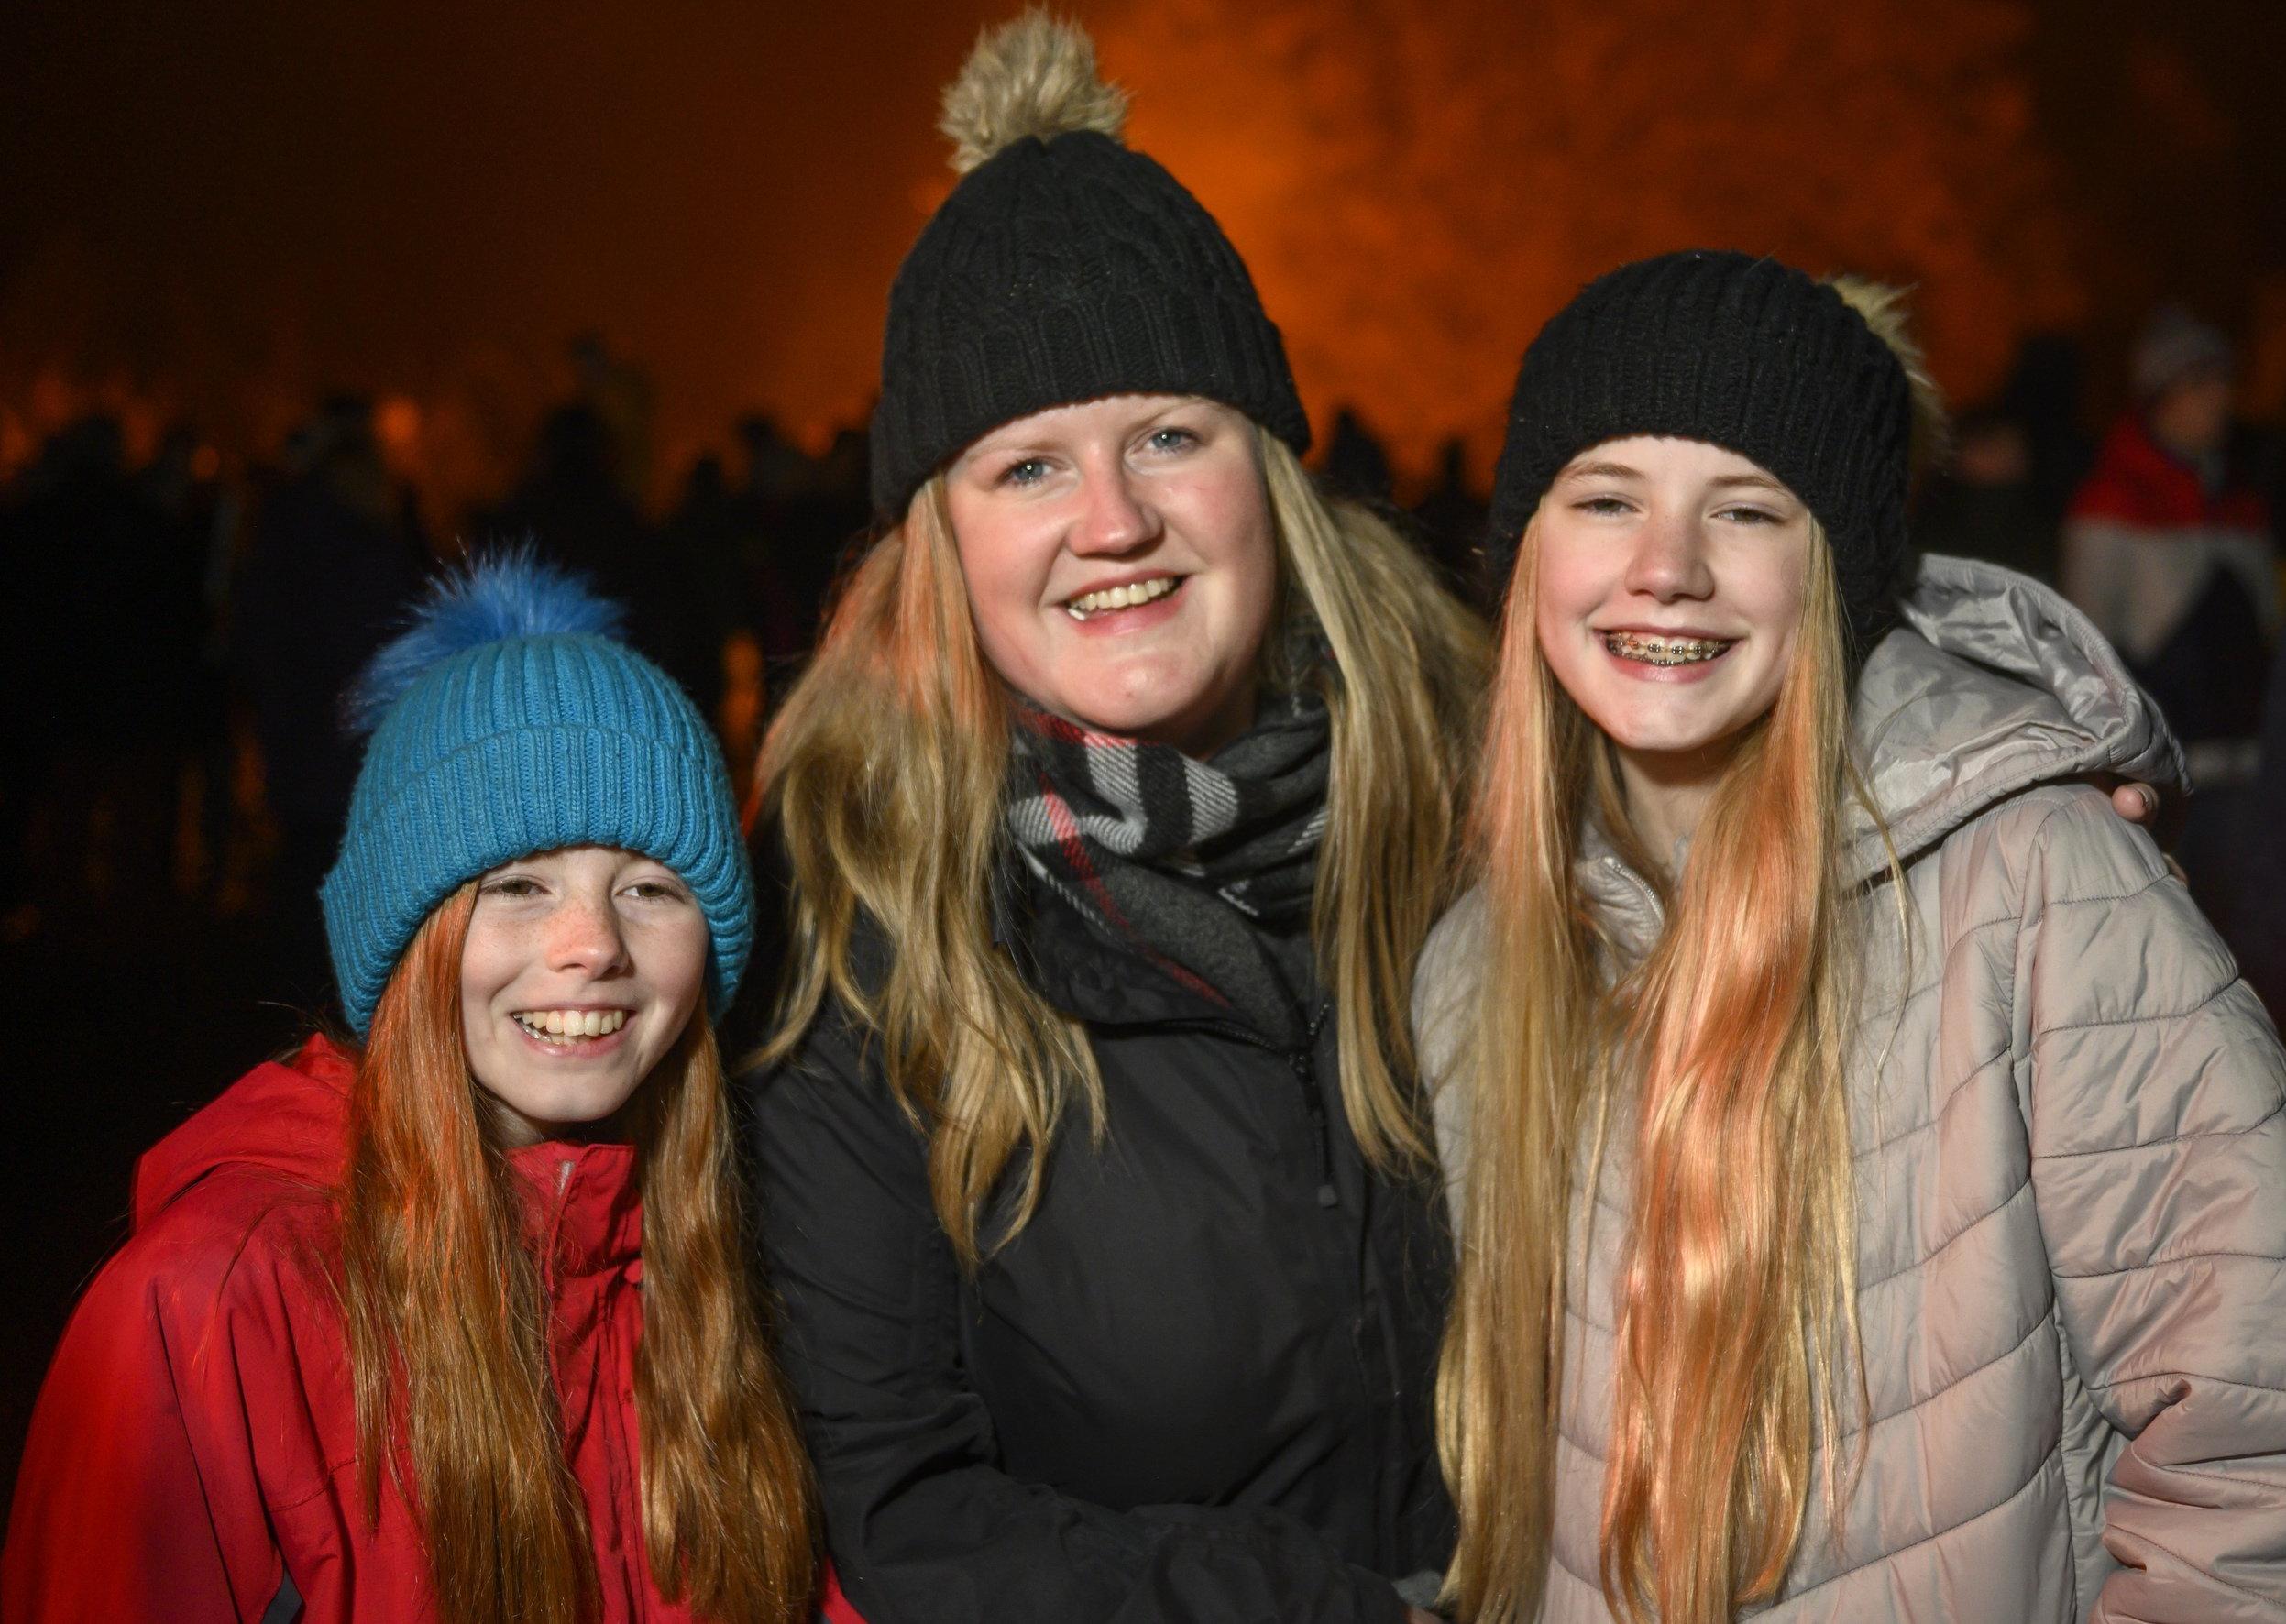 Lauder fireworks display 2019

Nikki Batchelor with daughters Lauren and Anna

Pic Phil Wilkinson 
info@philspix.com